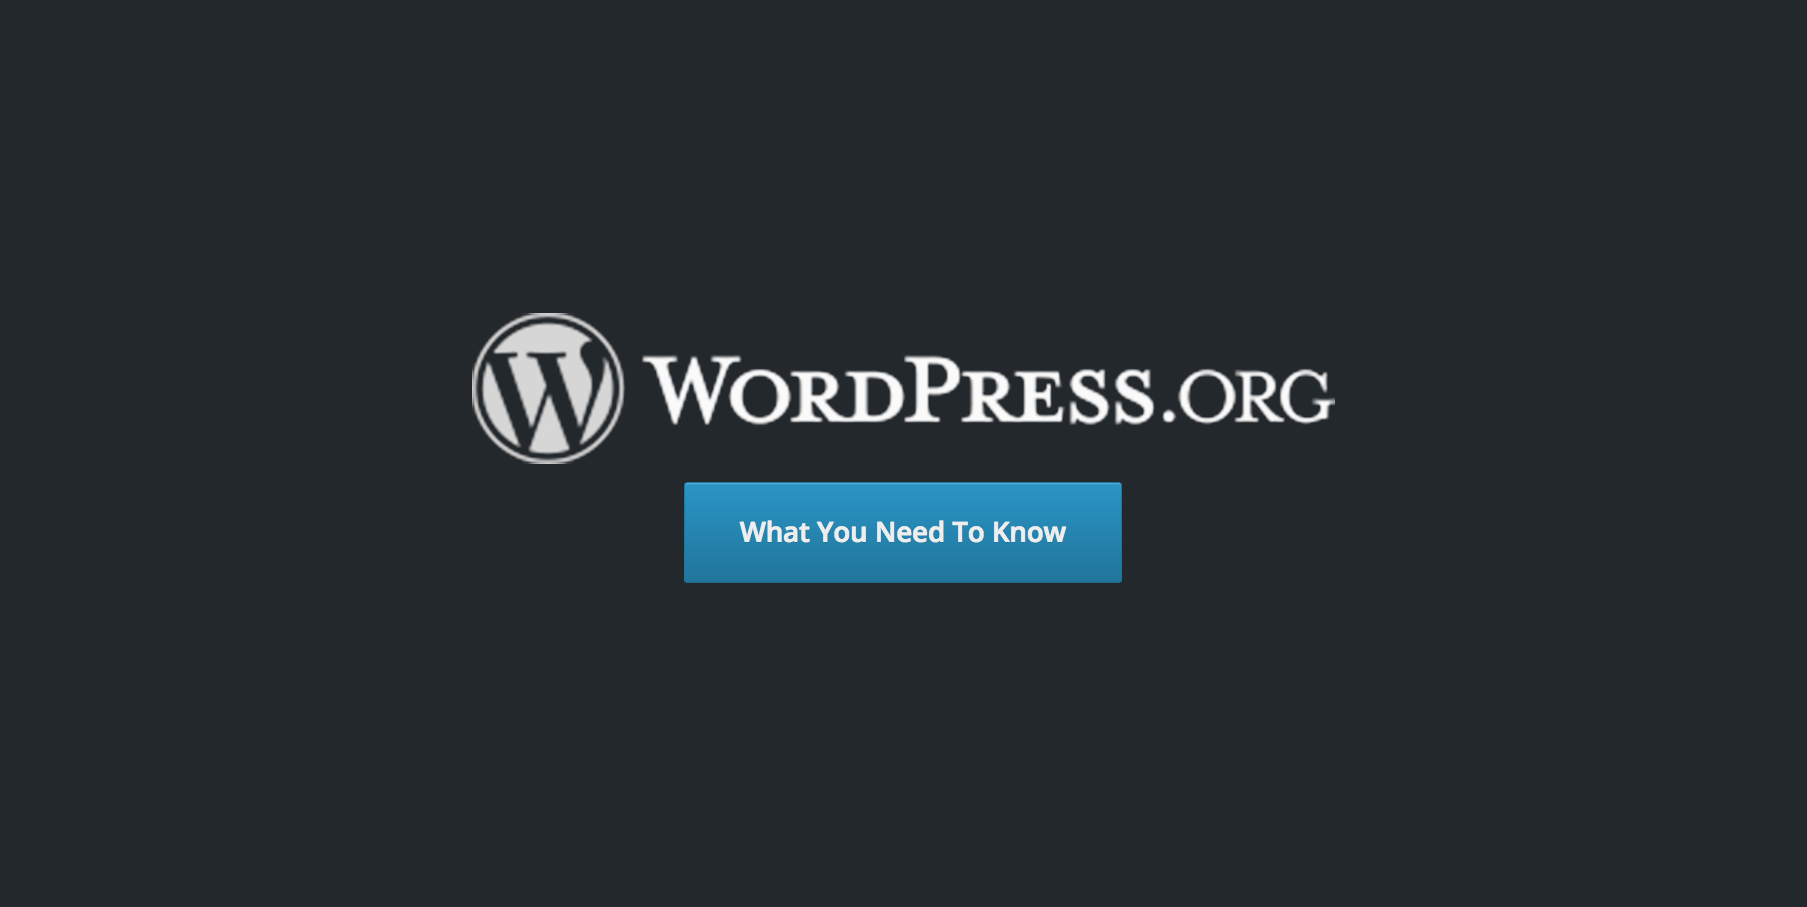 WordPress.org — Draft podcast